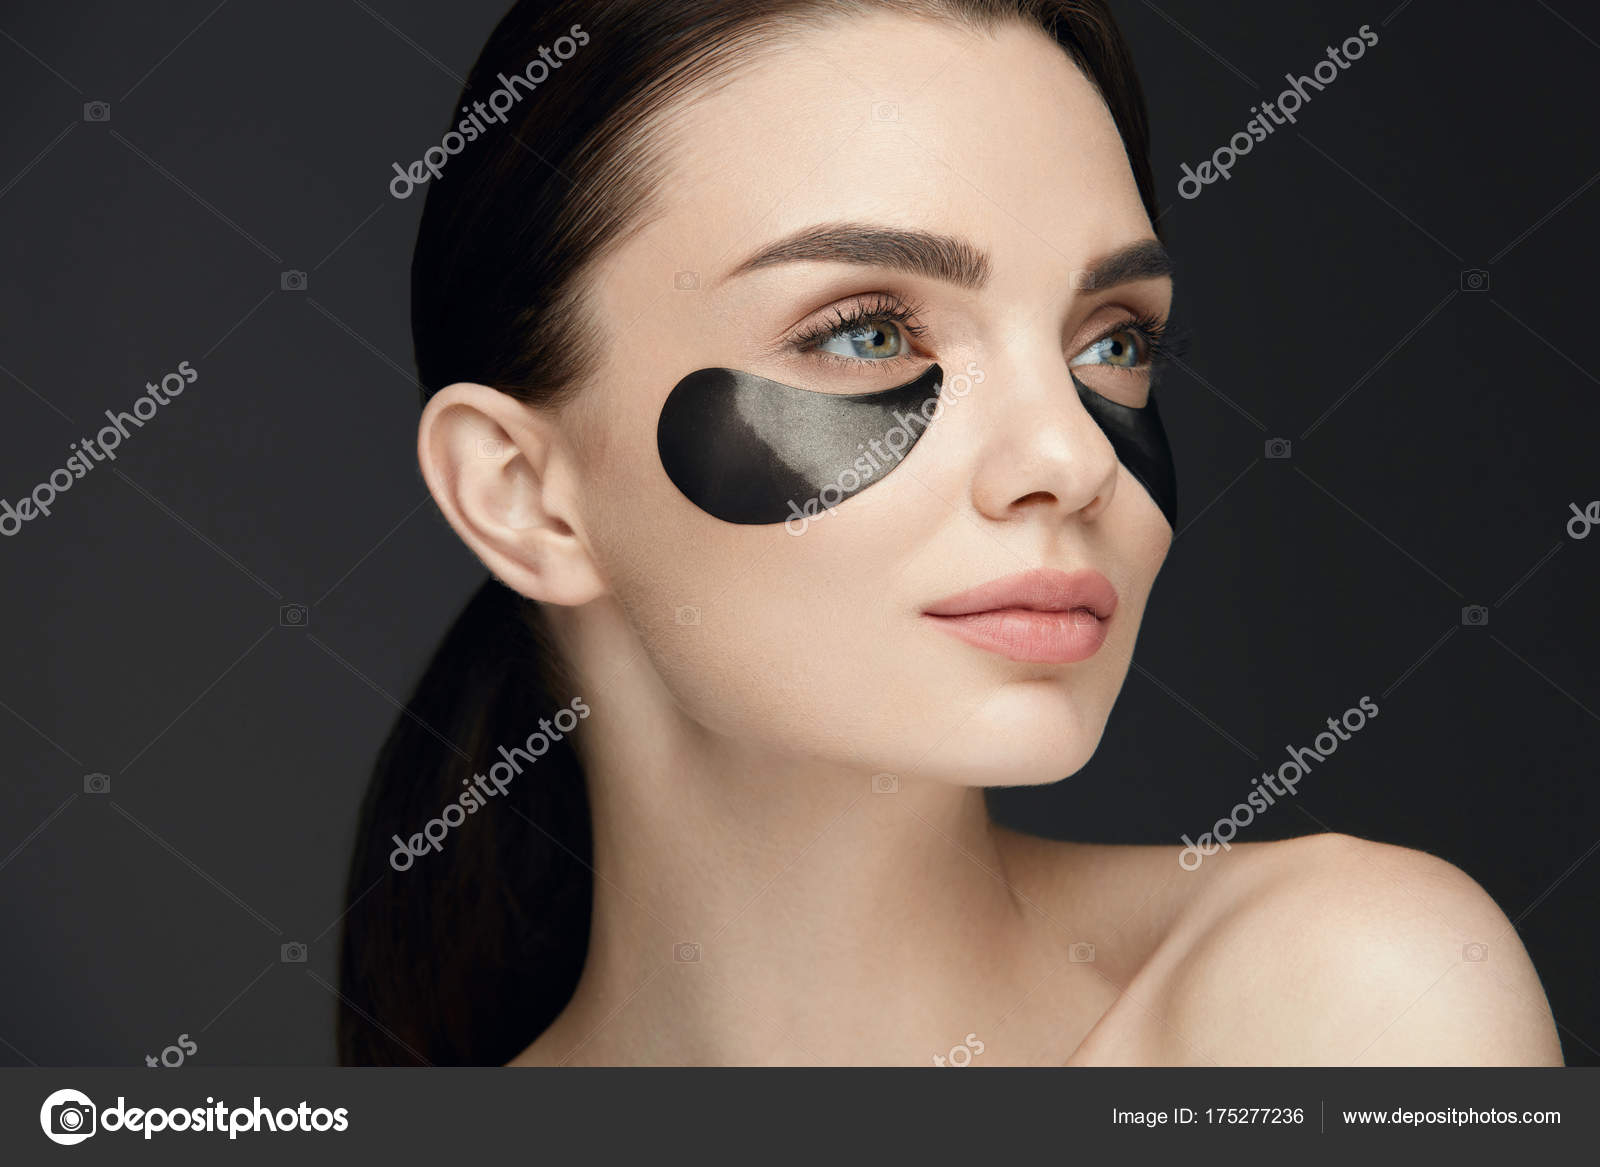 Eye Makeup Under Mask Woman Beauty Face With Mask Under Eyes Stock Photo Puhhha 175277236